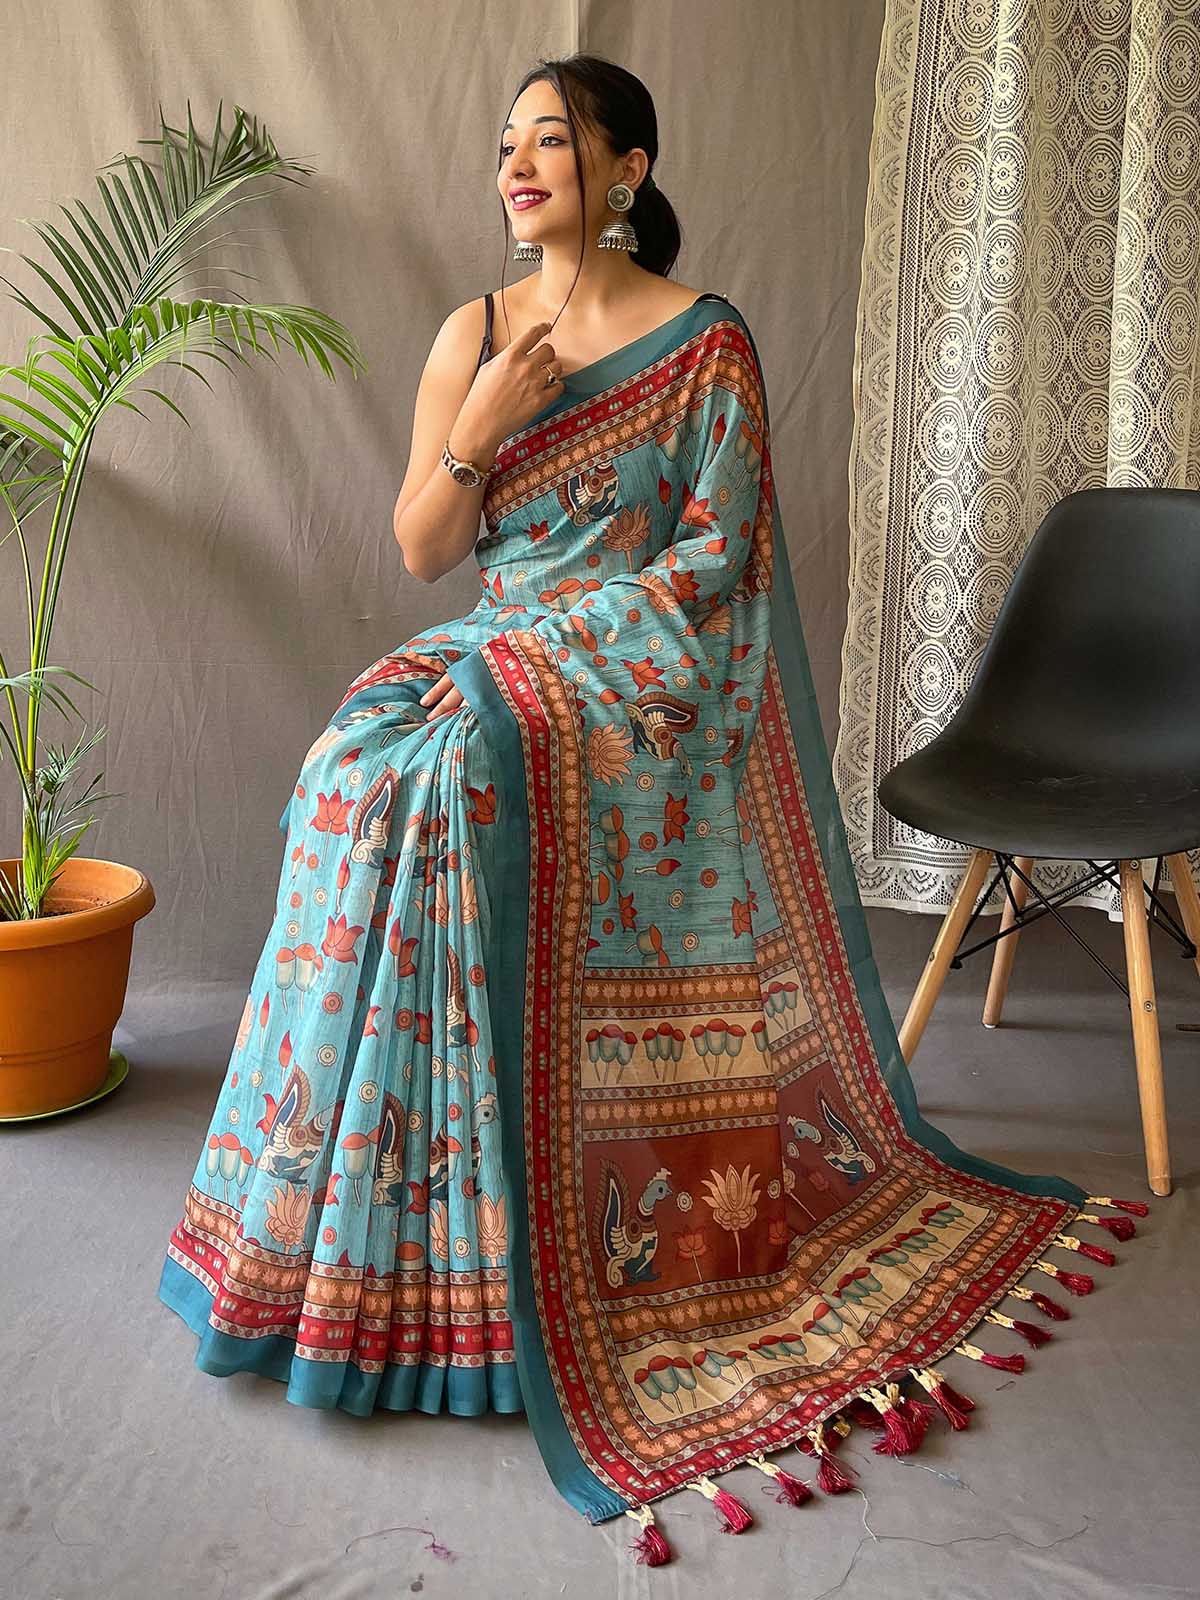 Discover Pure Malai Cotton Sarees with Kalamkari Prints and Tassel-Adorned Pallus- dvz0003882